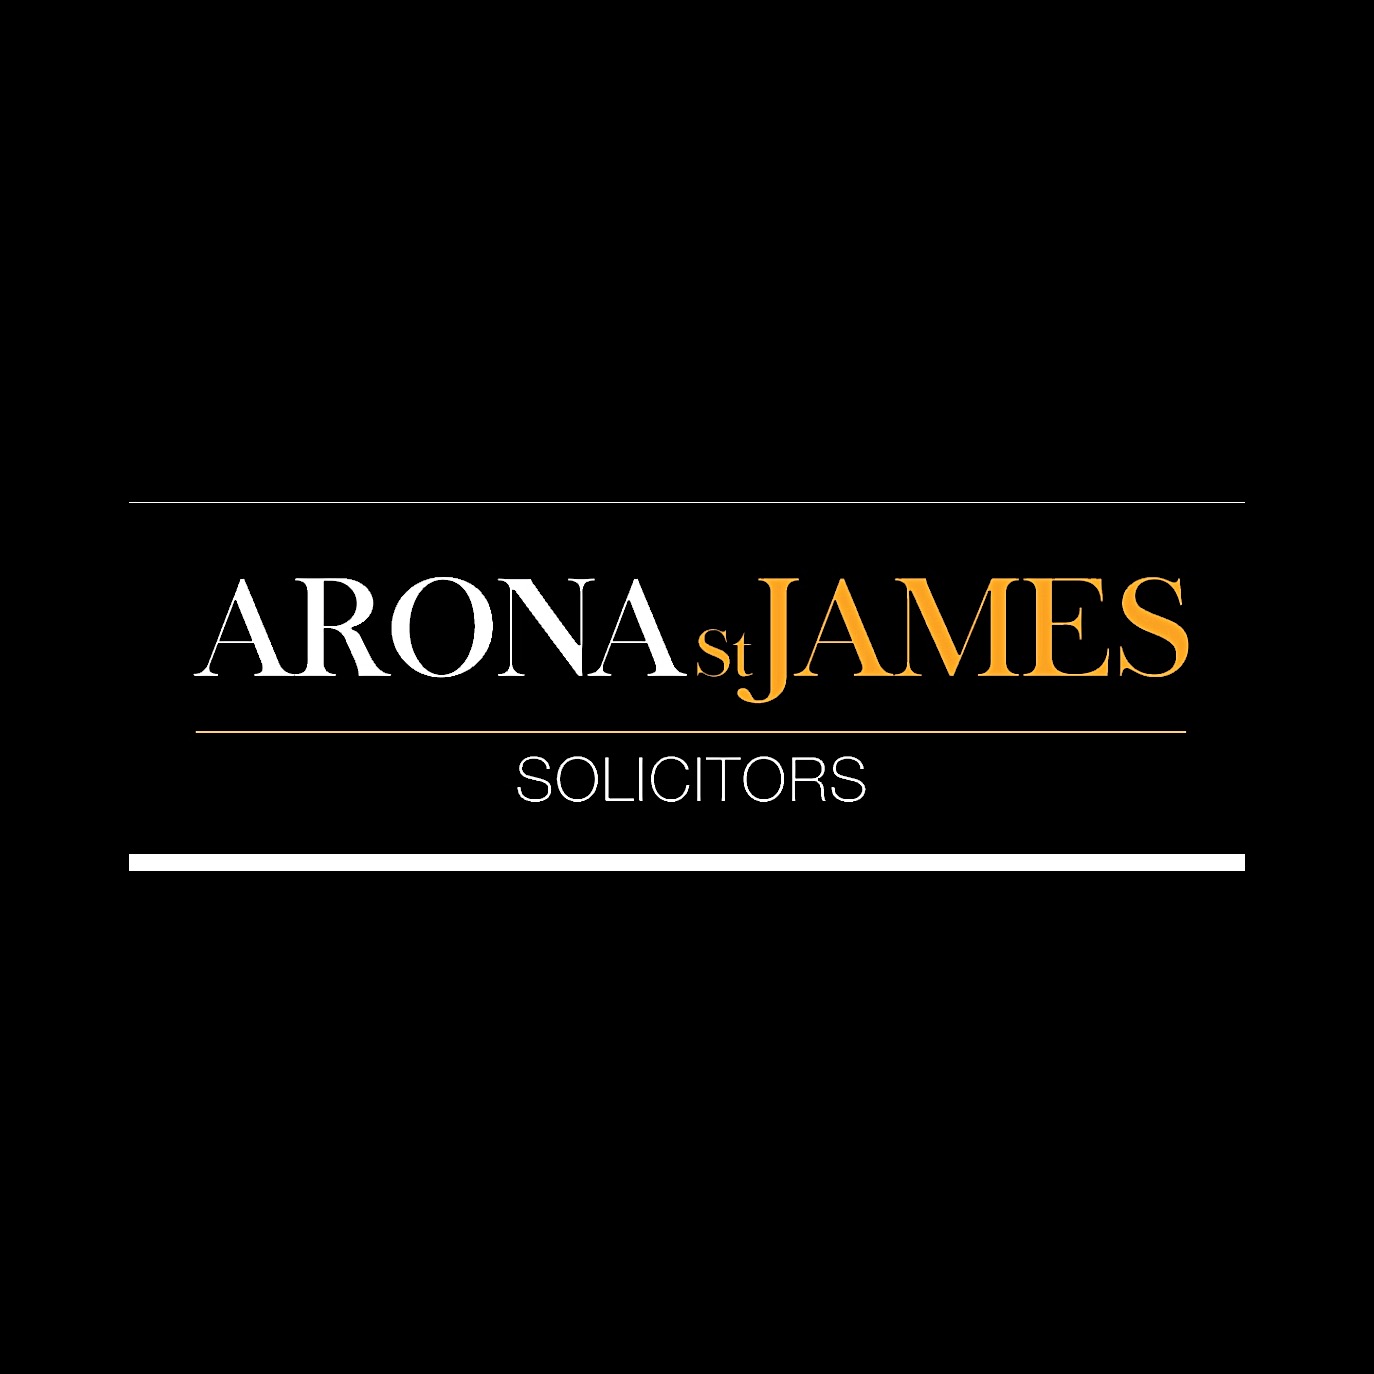 Arona St James solicitors